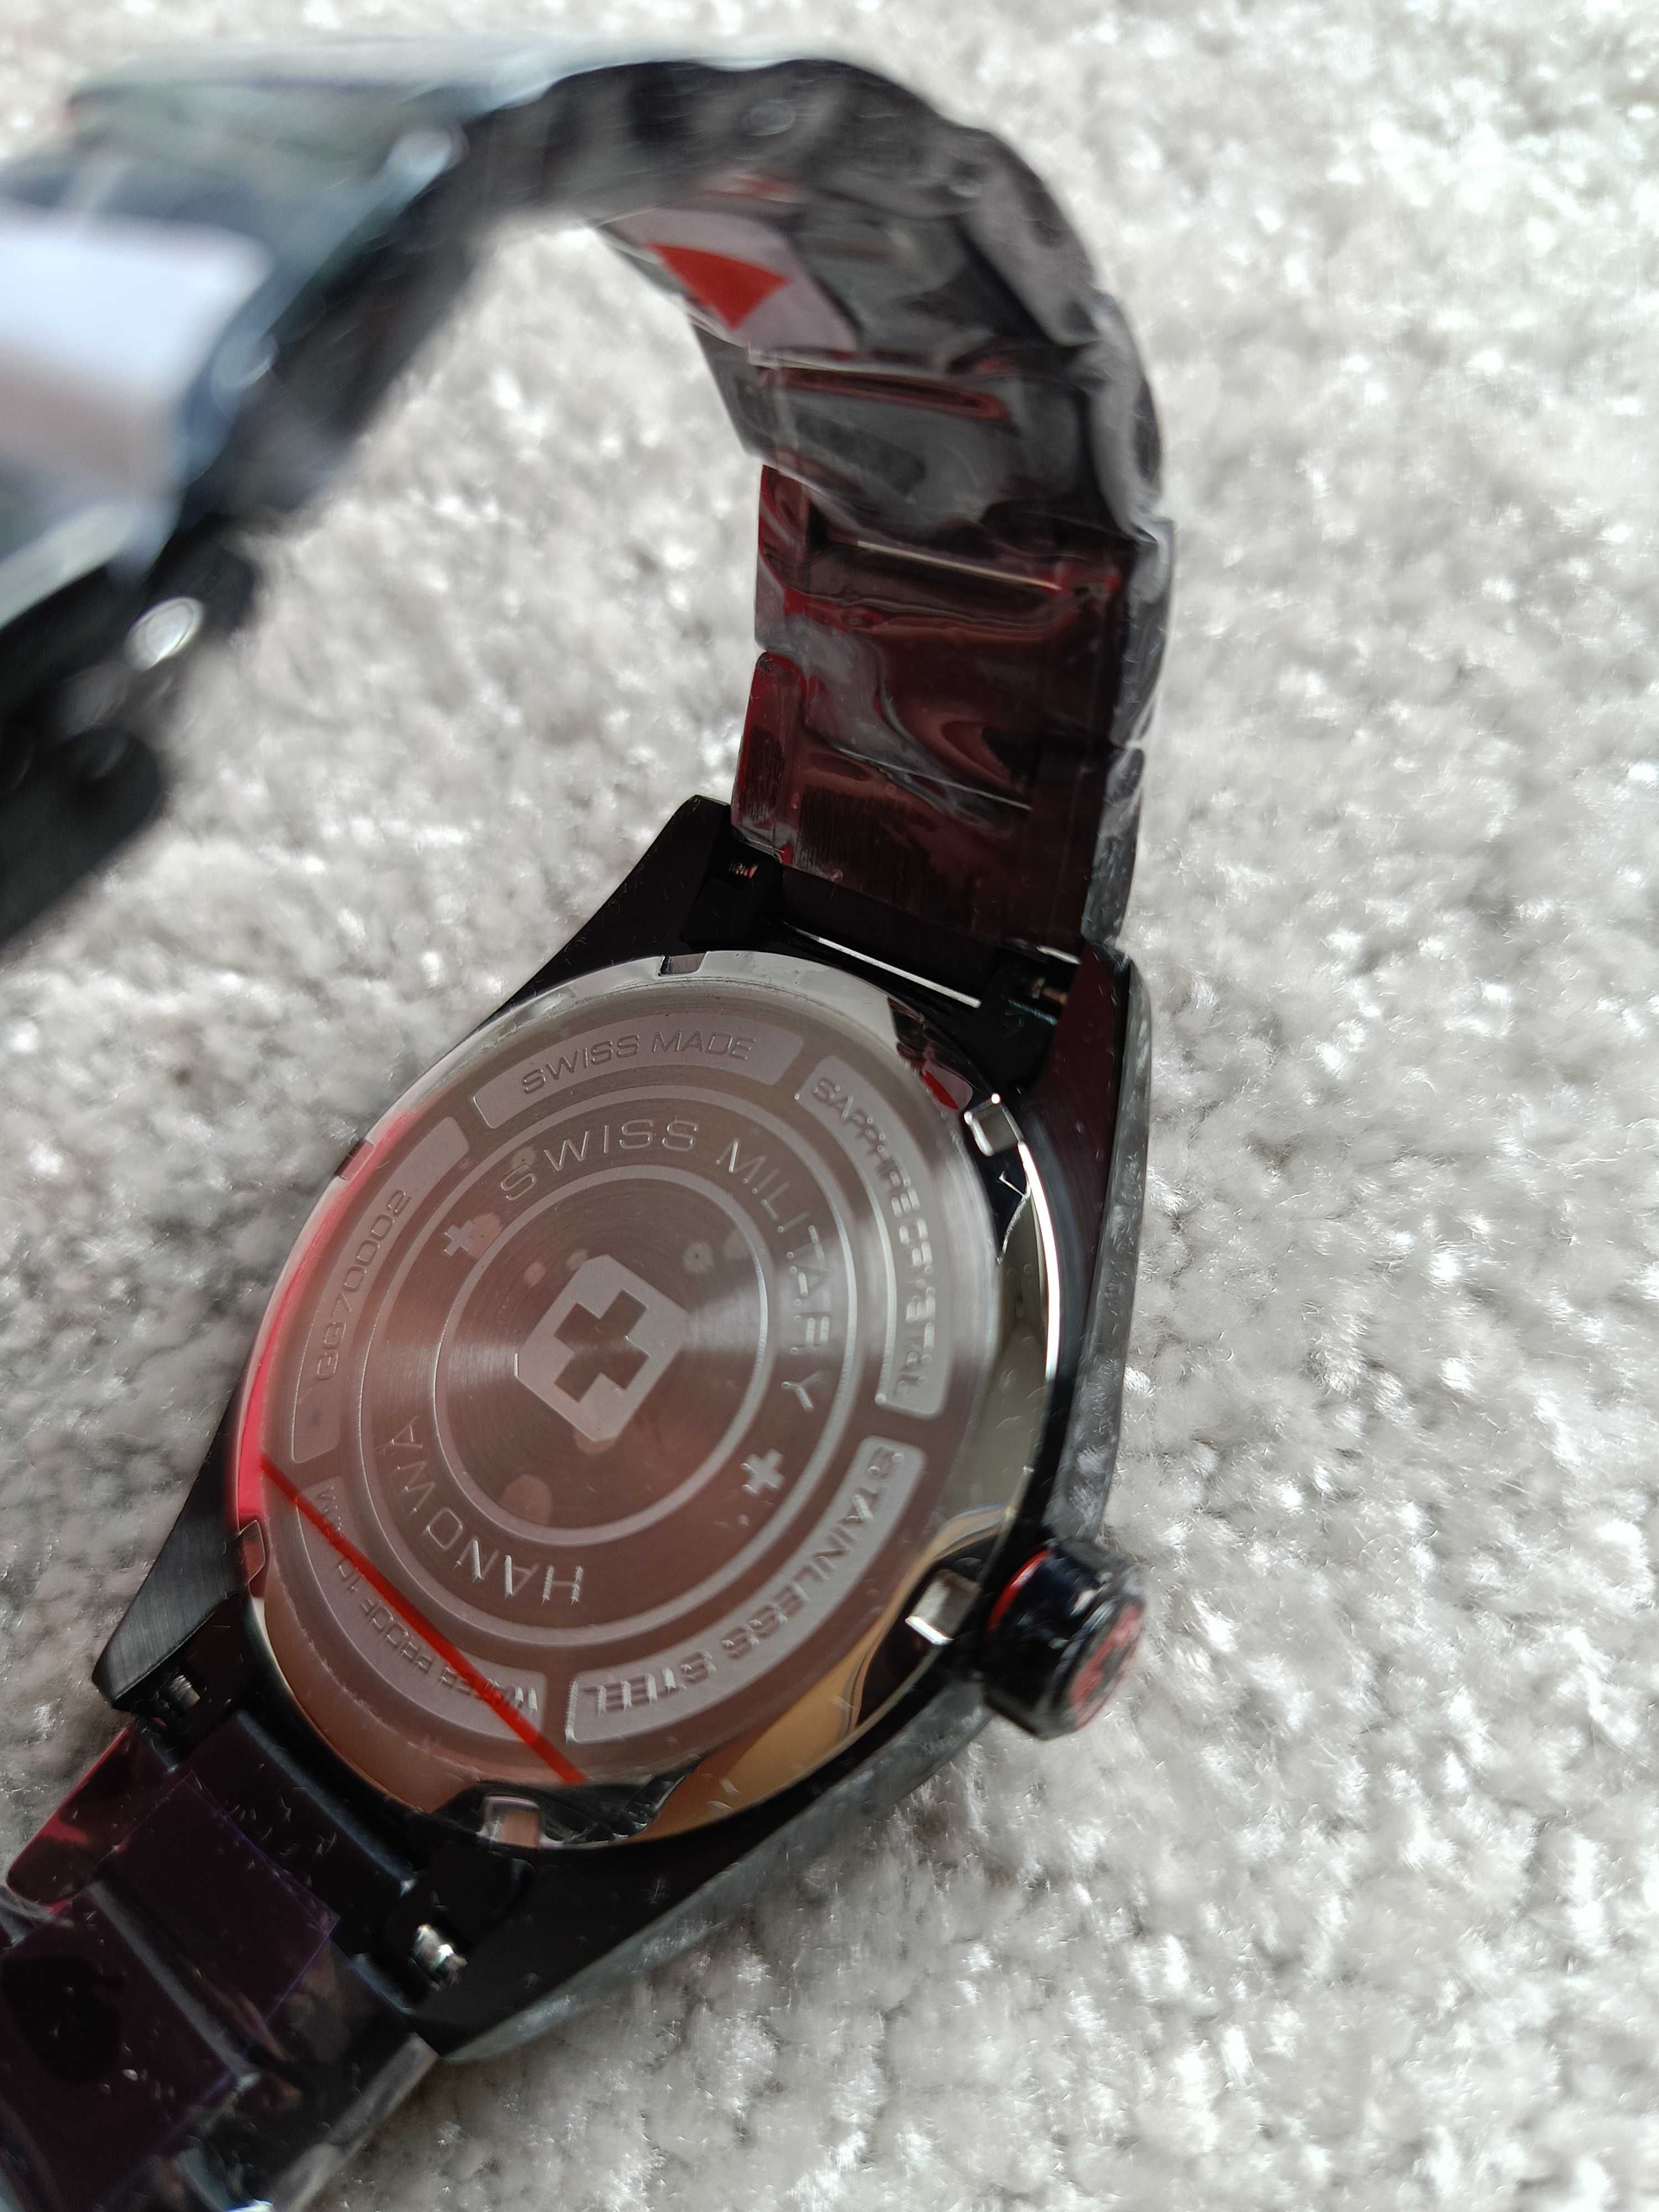 Zegarek Swiss Military Hanowa - nowy